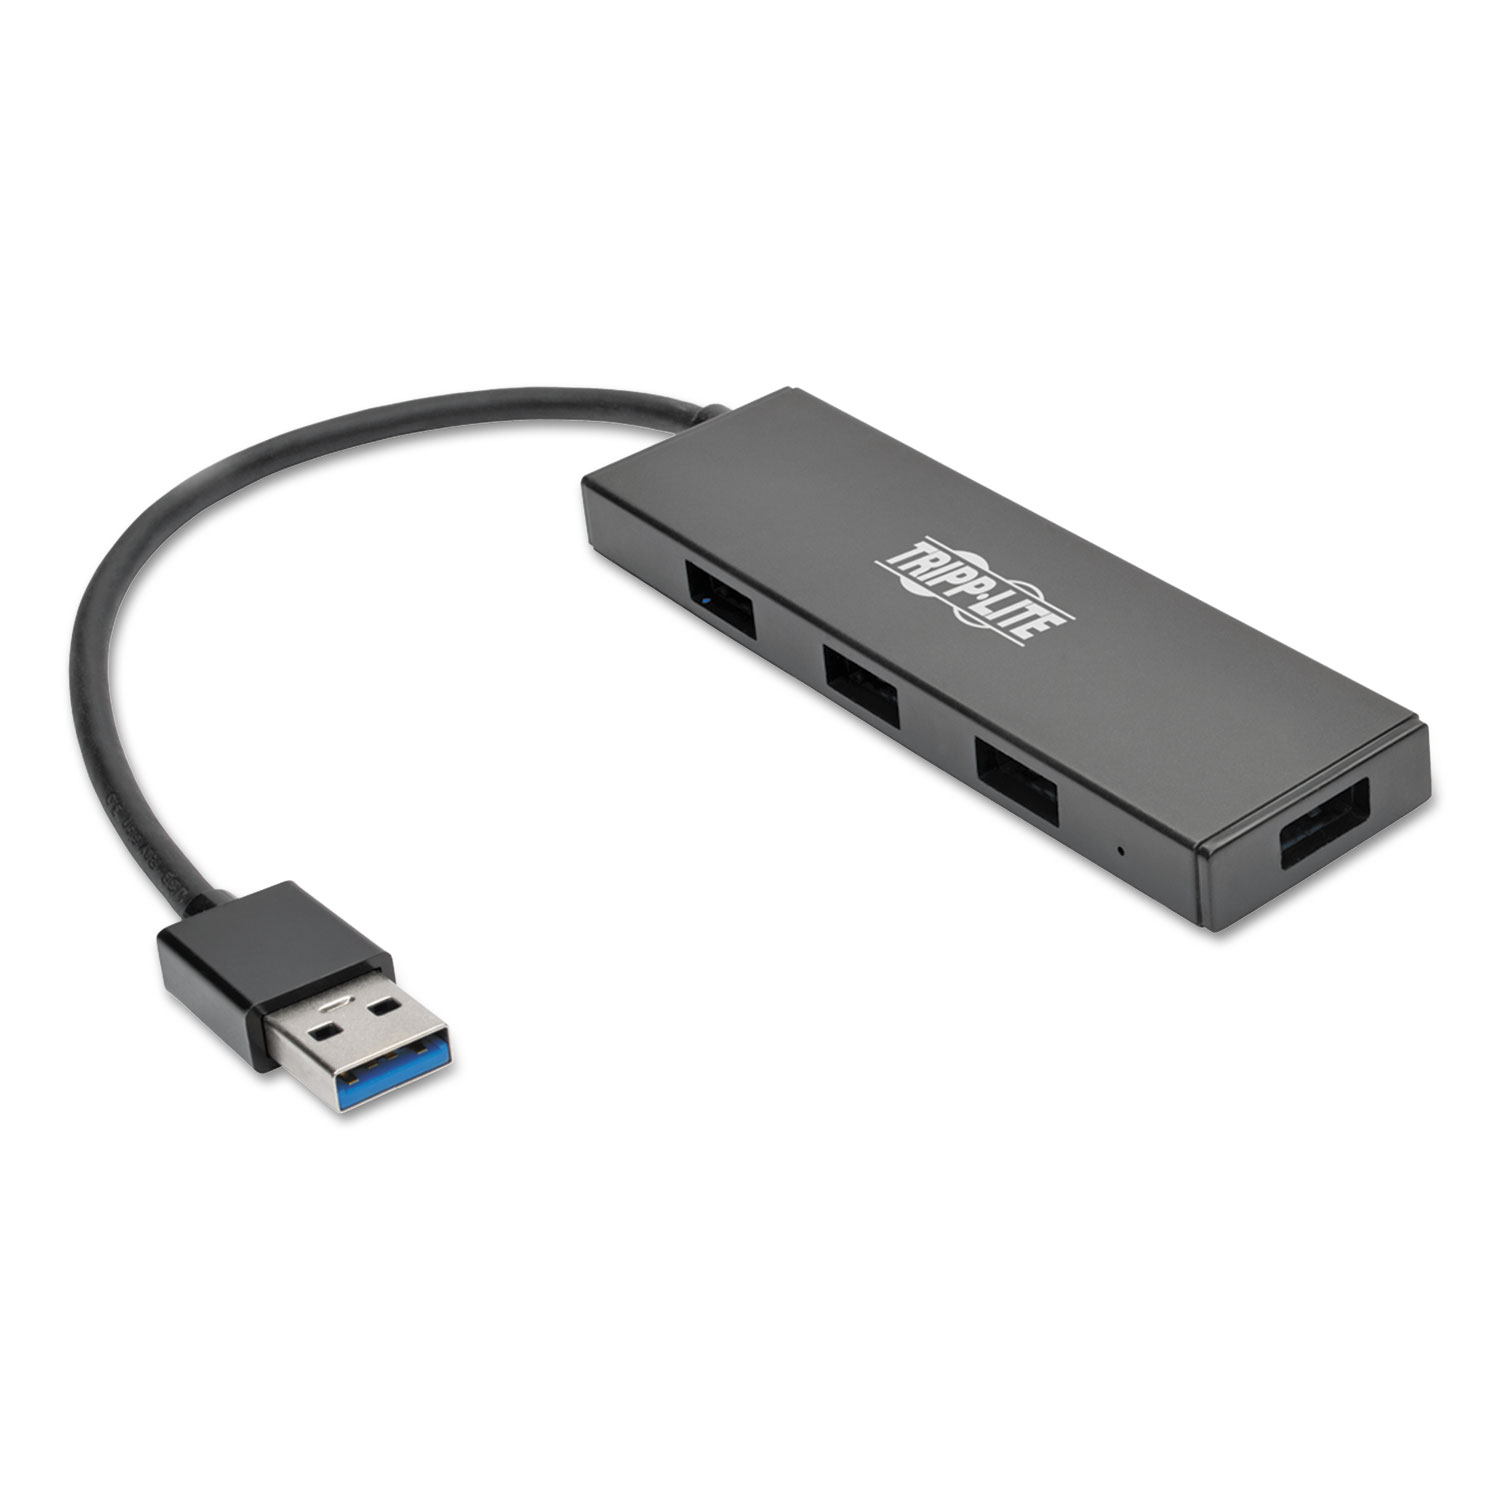 4-Port USB 3.0 SuperSpeed Hub, 4 Ports, Black